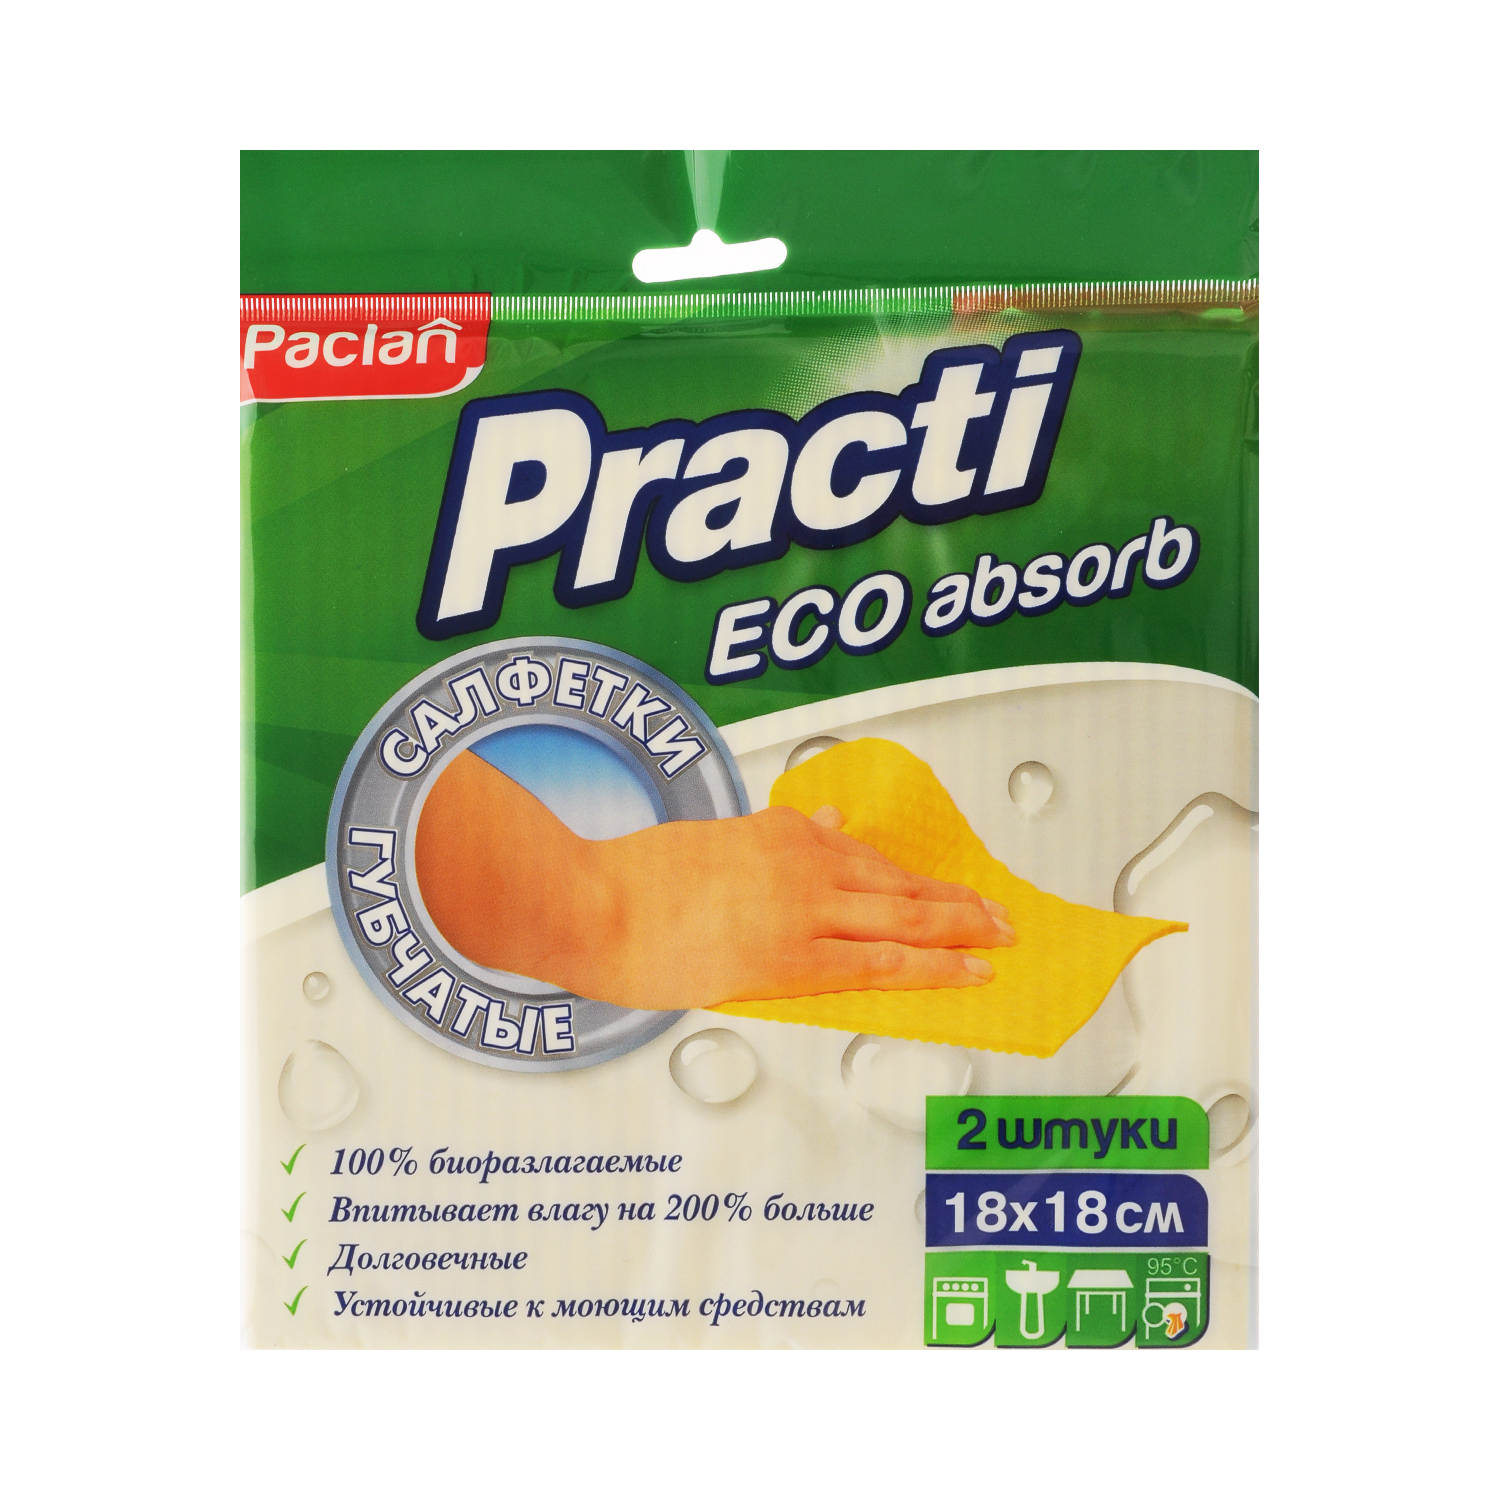 Набор салфеток для уборки Paclan Practi губчатые 2 шт набор салфеток paclan practi универсальные 30х40 см 10 шт